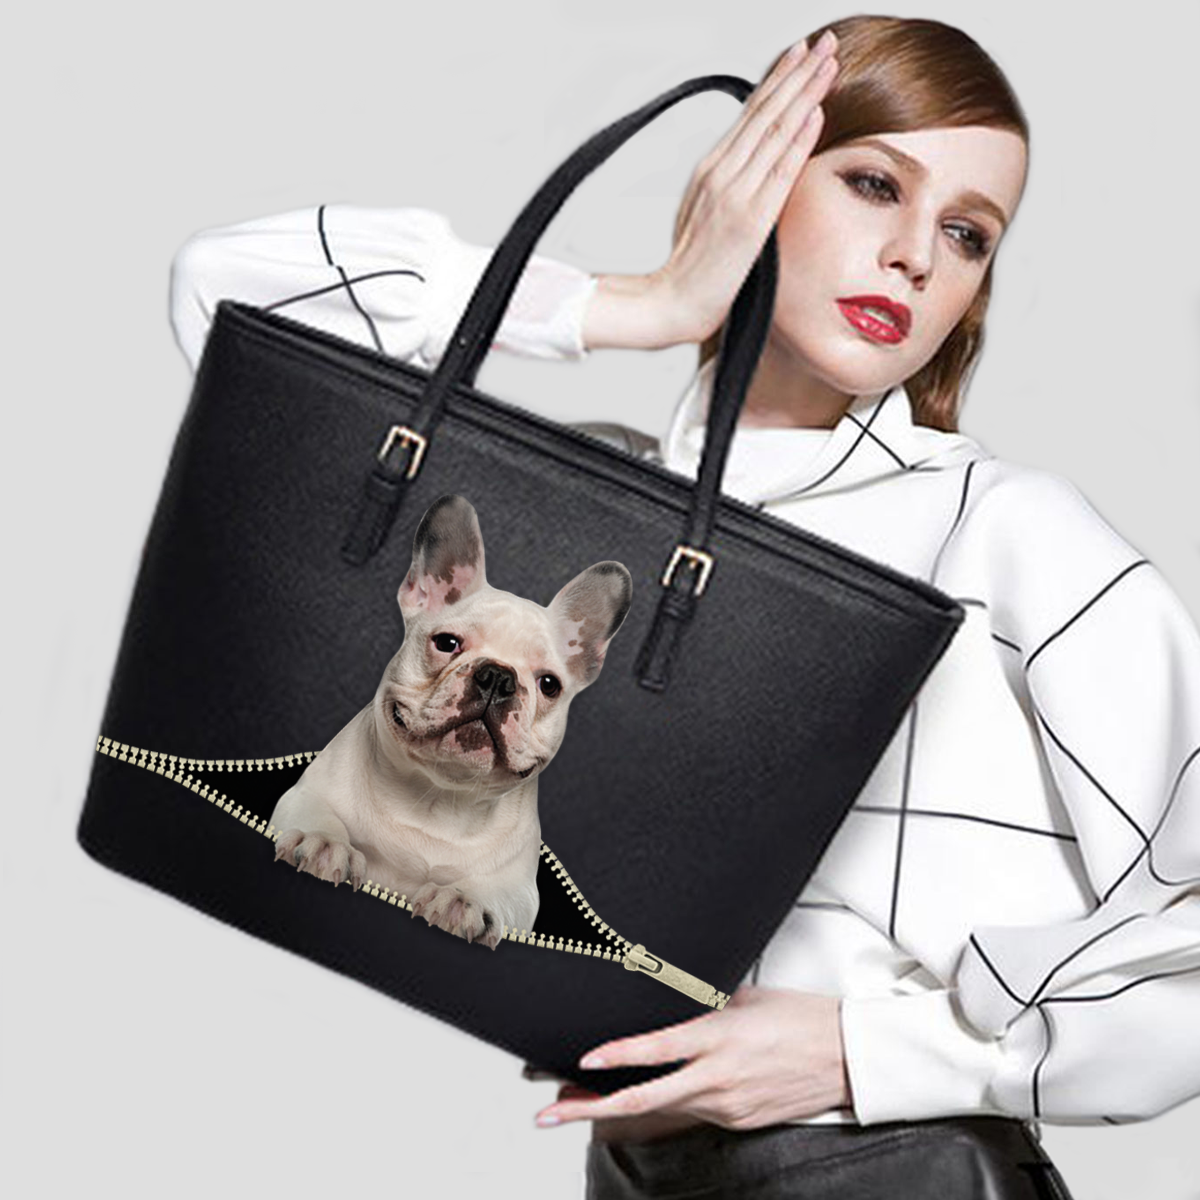 French Bulldog Tote Bag V2